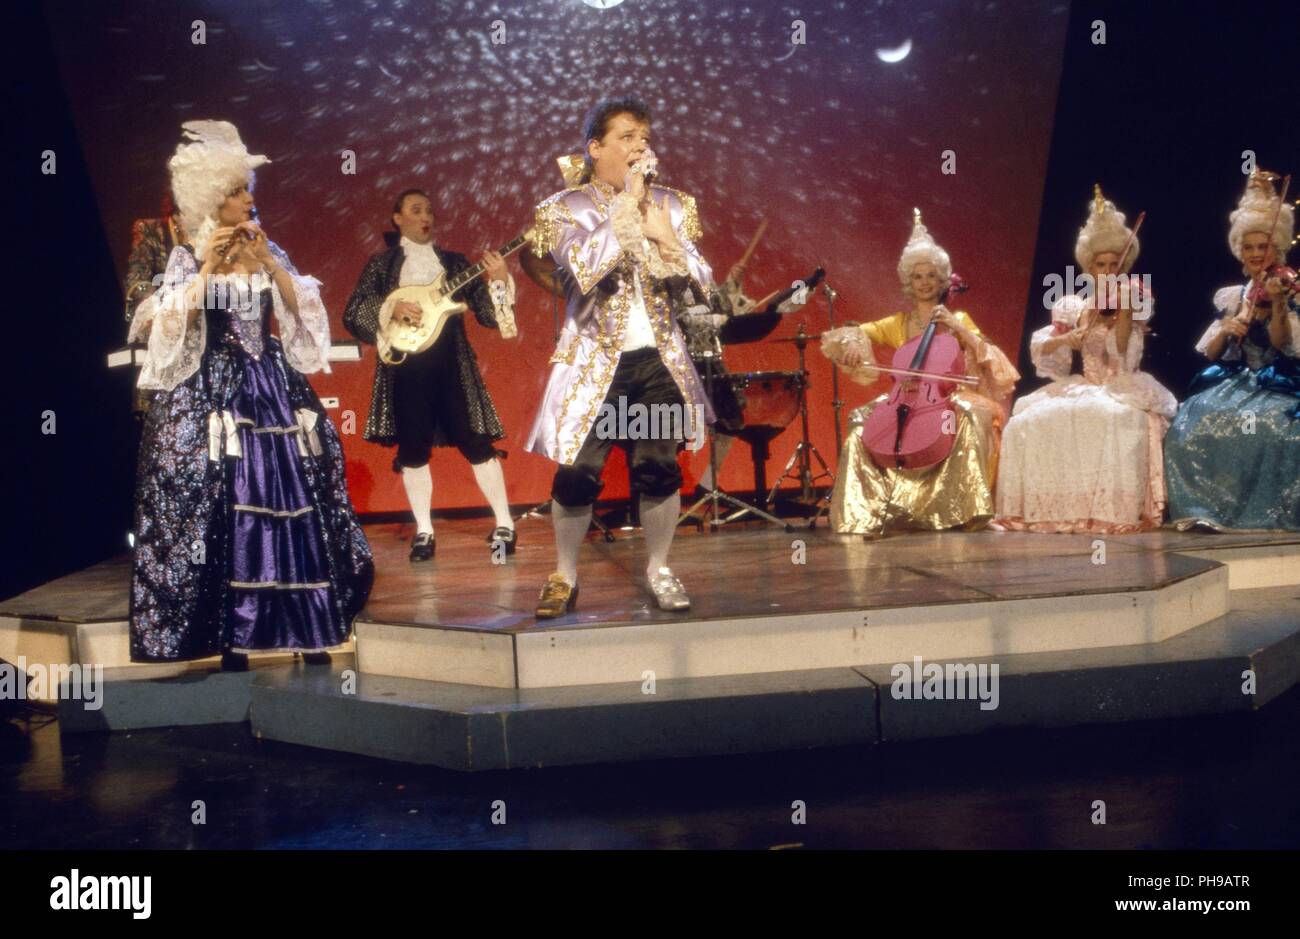 'Amadeus', Gruppe bei der ZDF 'Hitparade' in Berlin, Deutschland 1991. Group 'Amadeus' performing at German TV chart show 'Hitparade' in Berlin, Germa Stock Photo